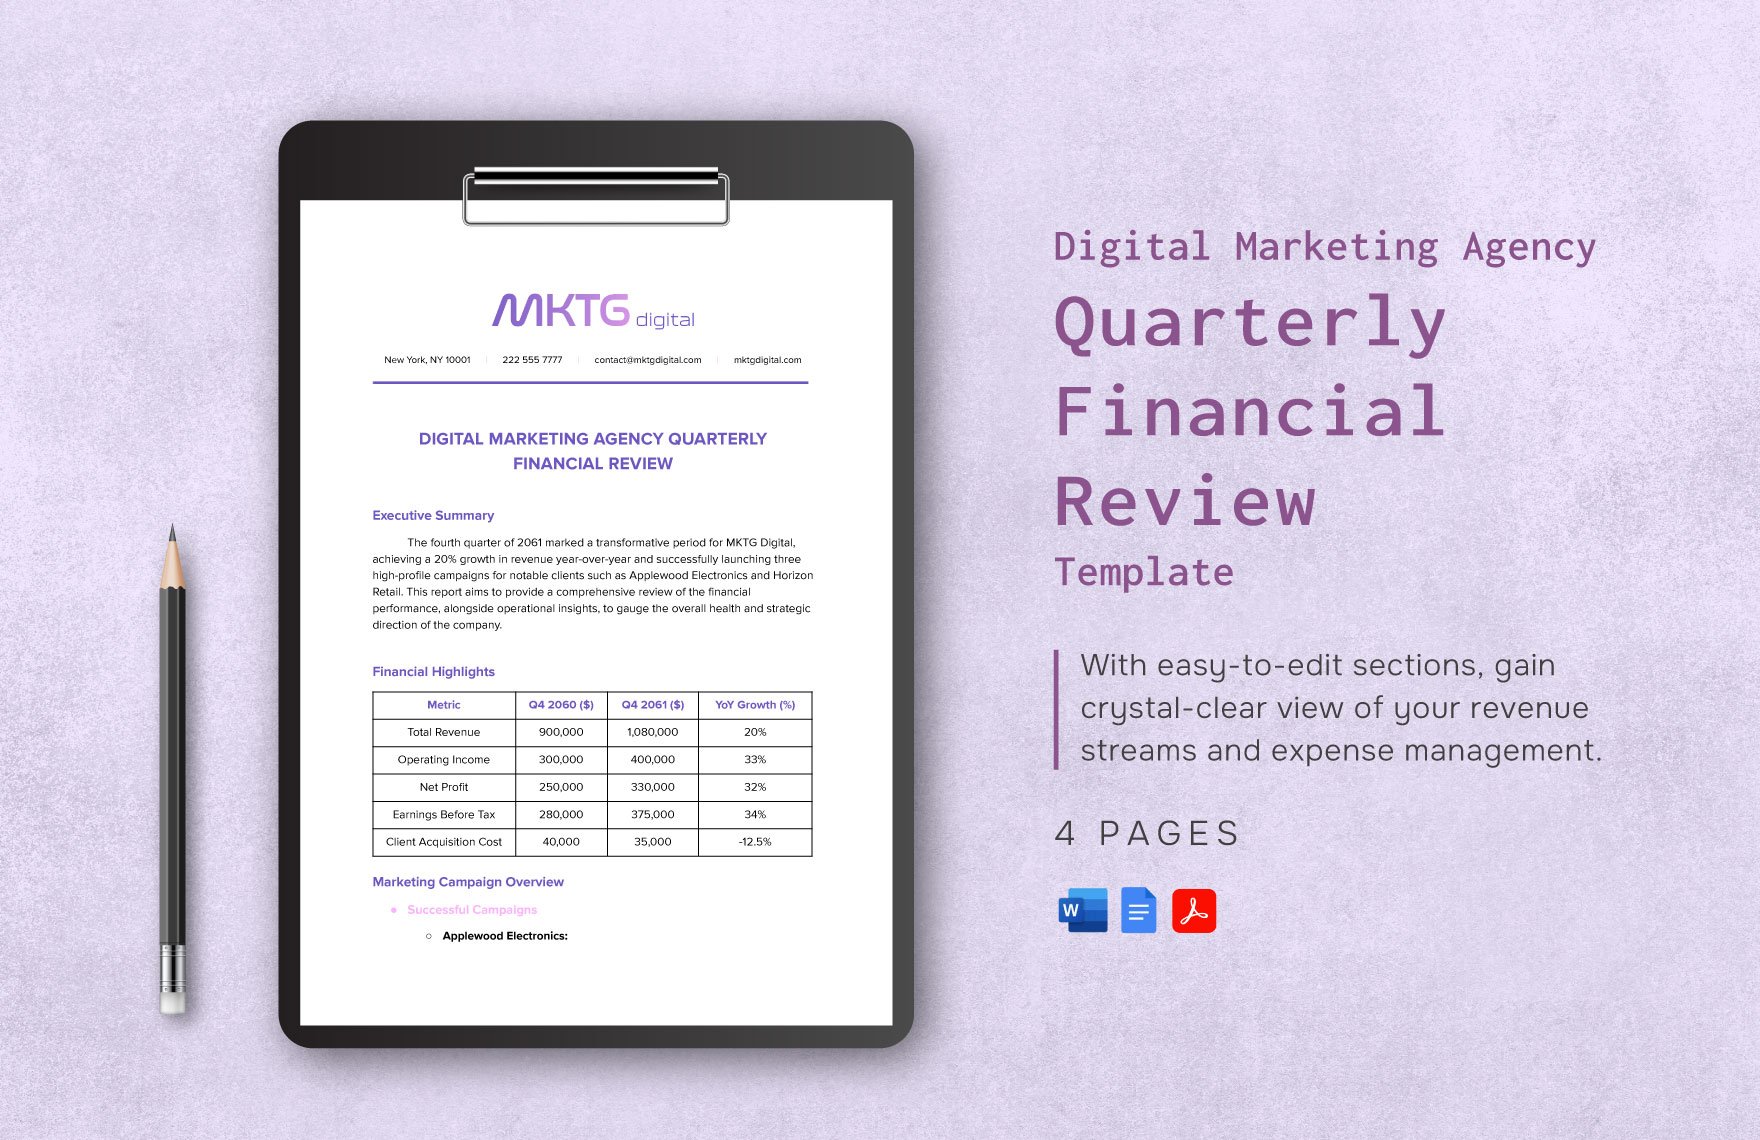 Digital Marketing Agency Quarterly Financial Review Template